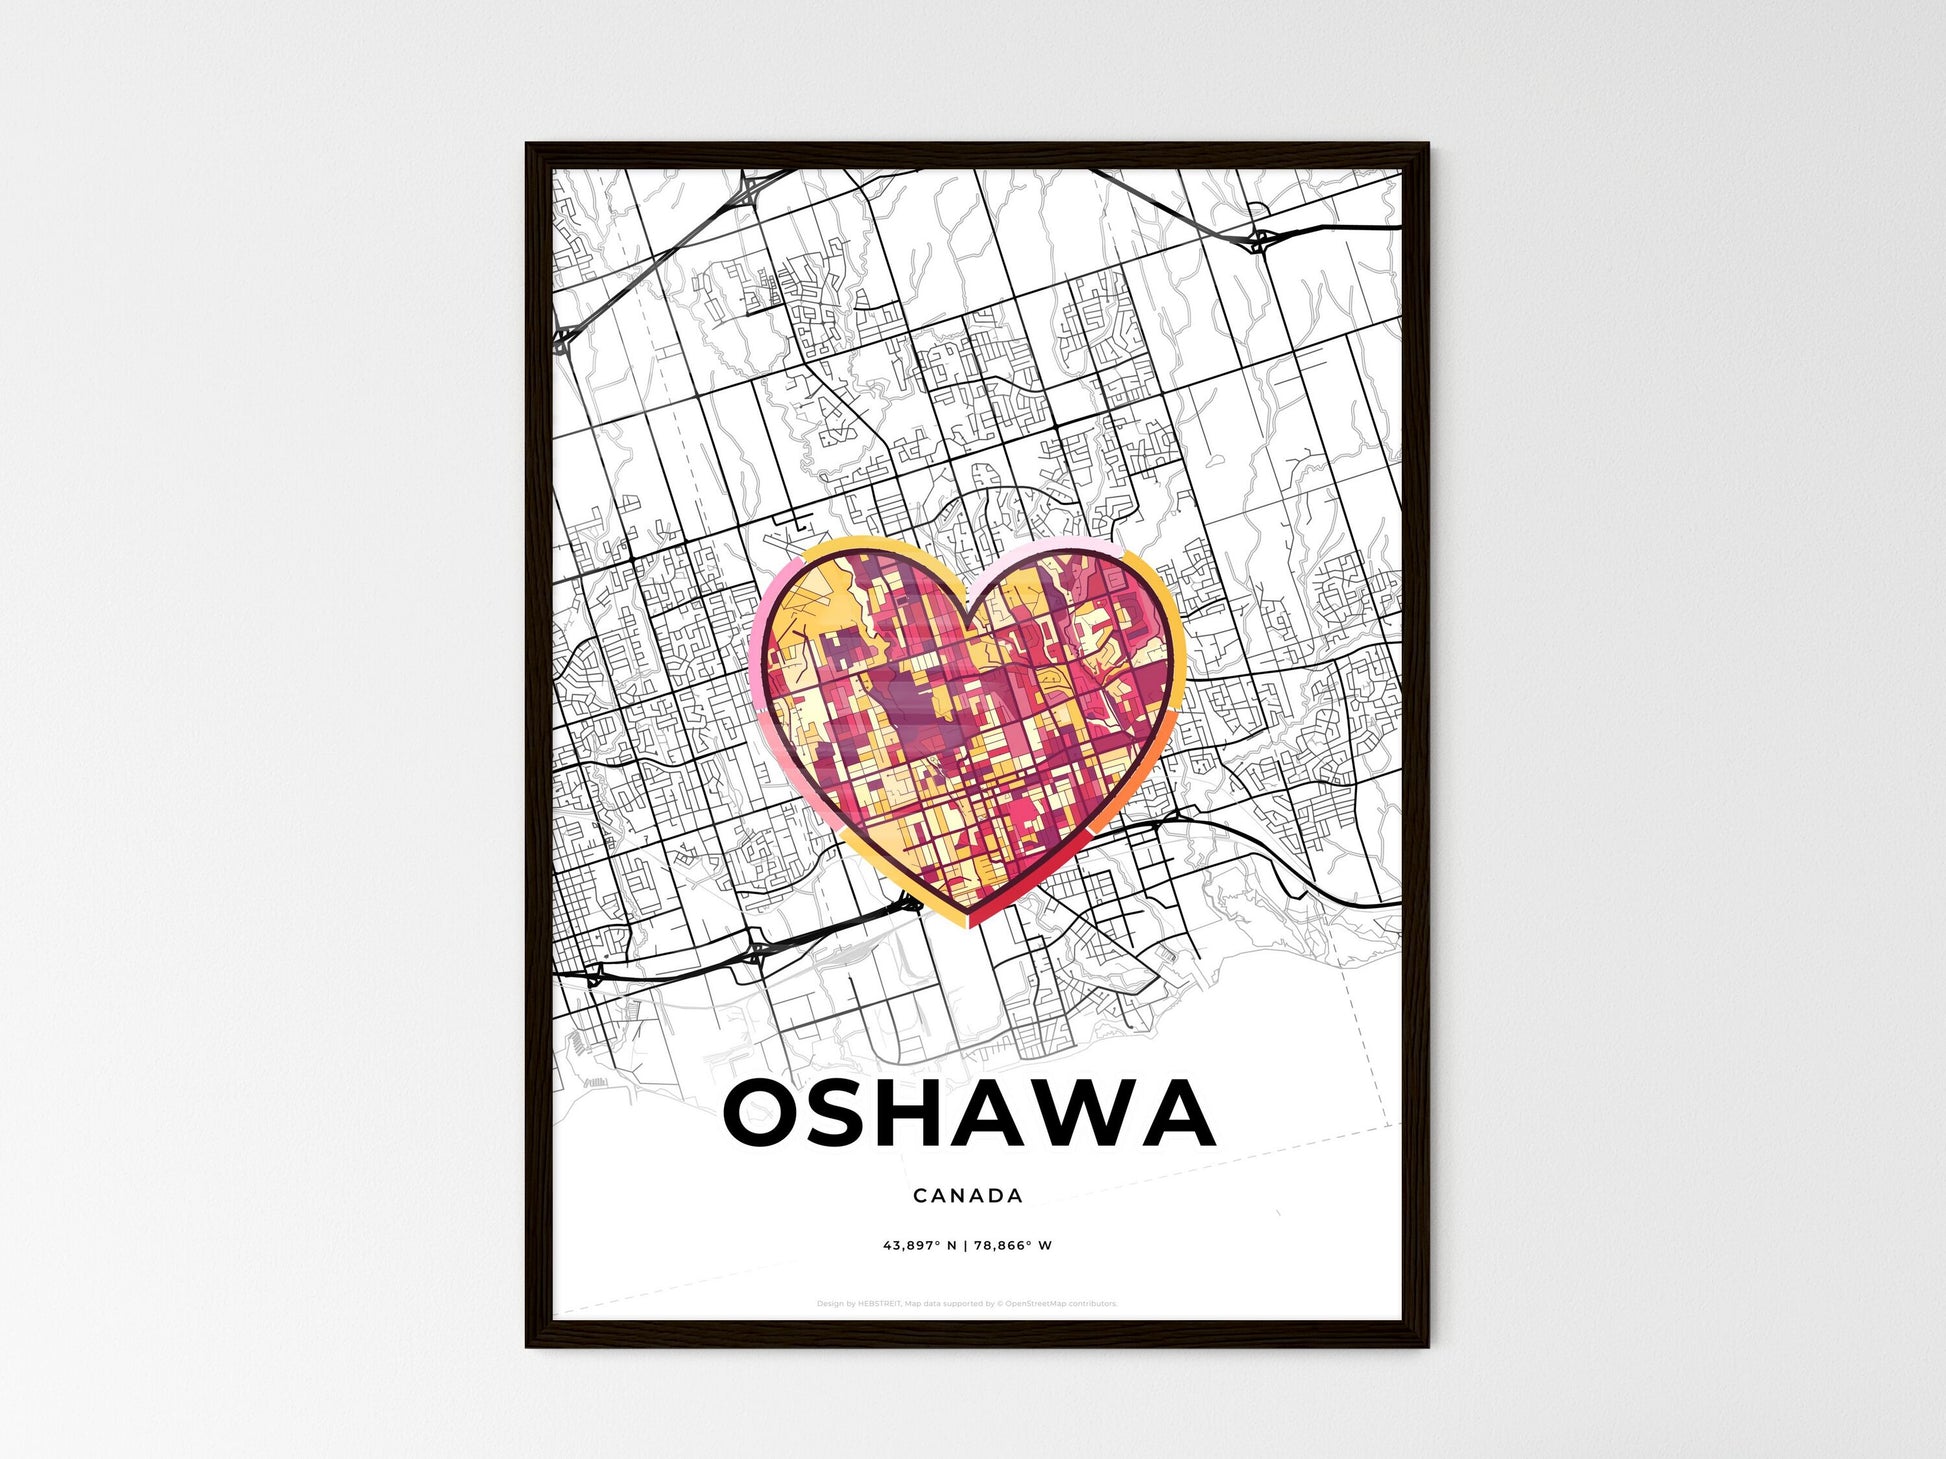 OSHAWA CANADA minimal art map with a colorful icon. Style 2